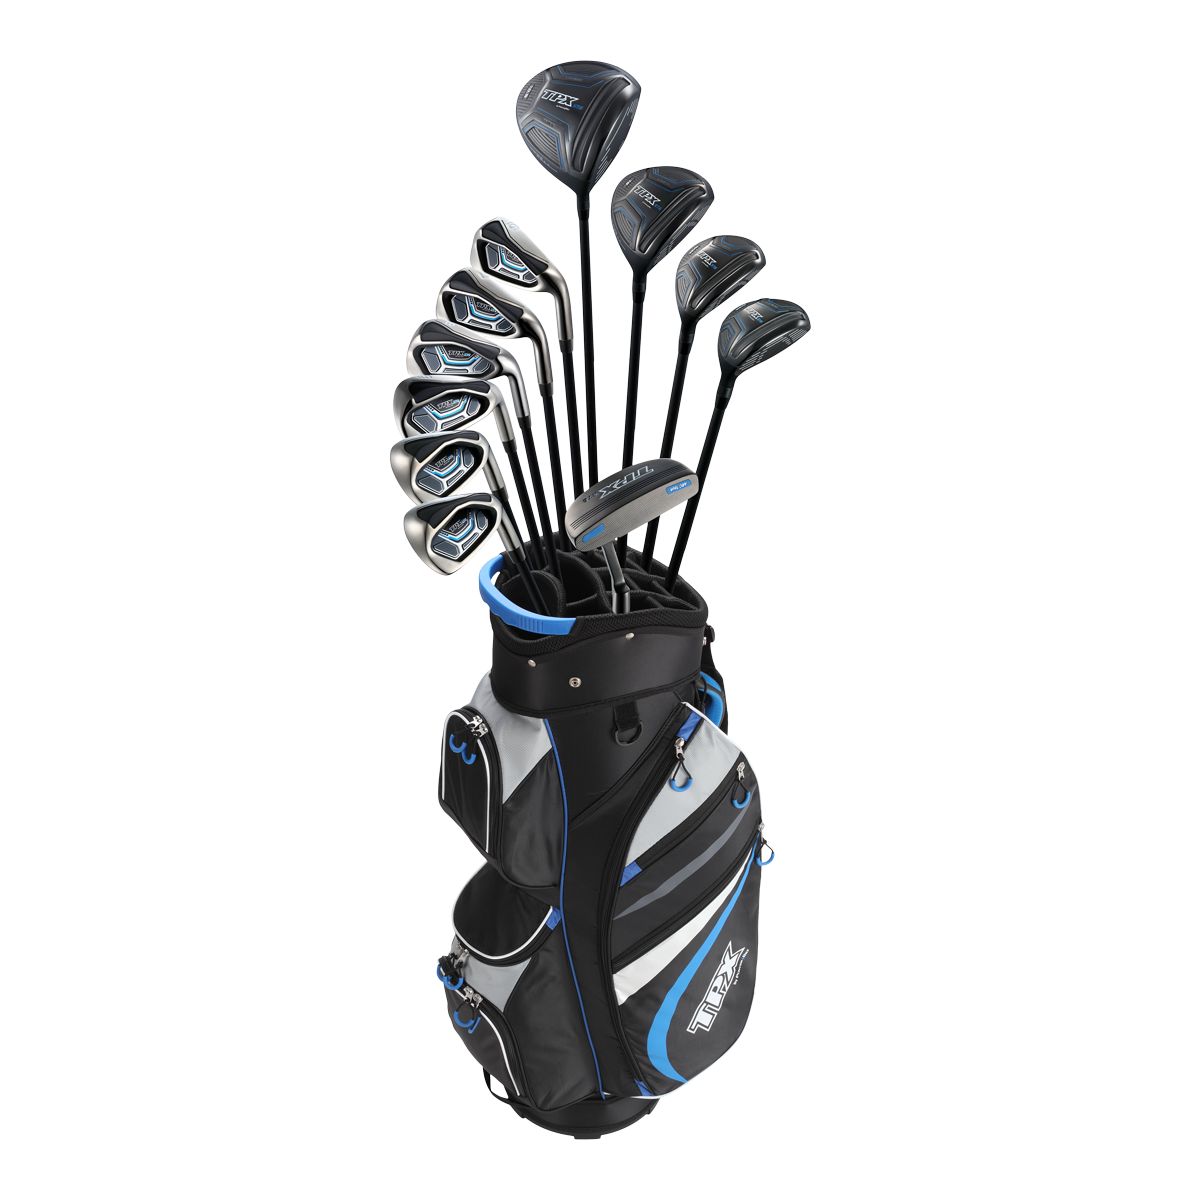 Powerbilt TPX XT6 Senior Complete Golf Set  Graphite Shafts  Bag Included